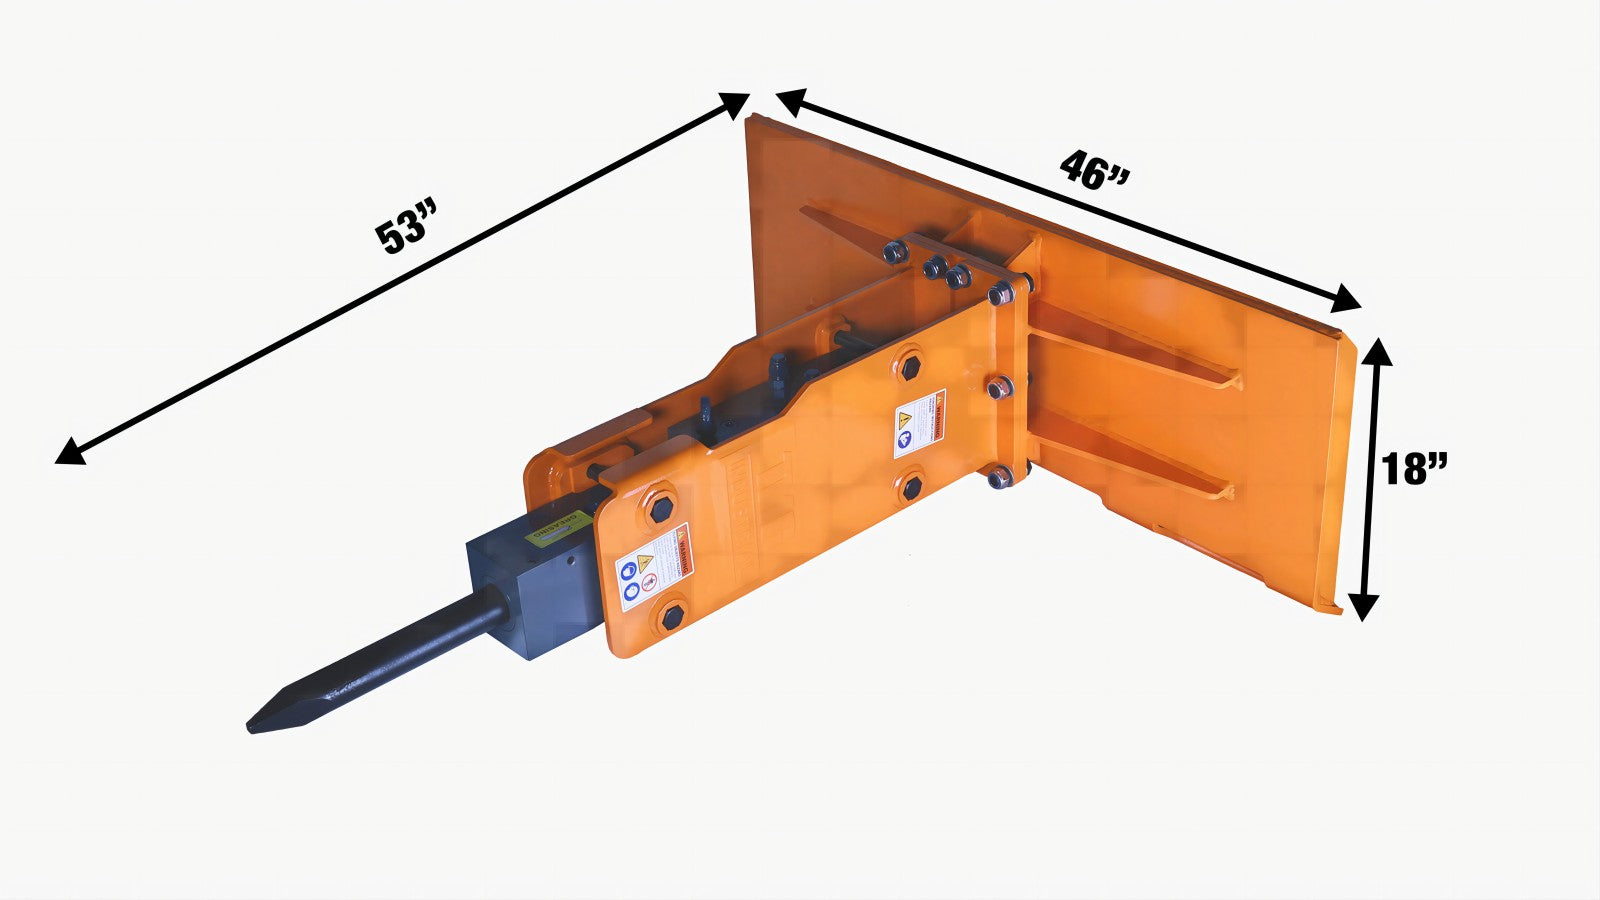 TMG Industrial 30-70 HP Skid Steer Hydraulic Hammer Breaker, 2” Moil Point Chisel, 350 J Impact Energy, Universal Mount, TMG-HB53S-specifications-image